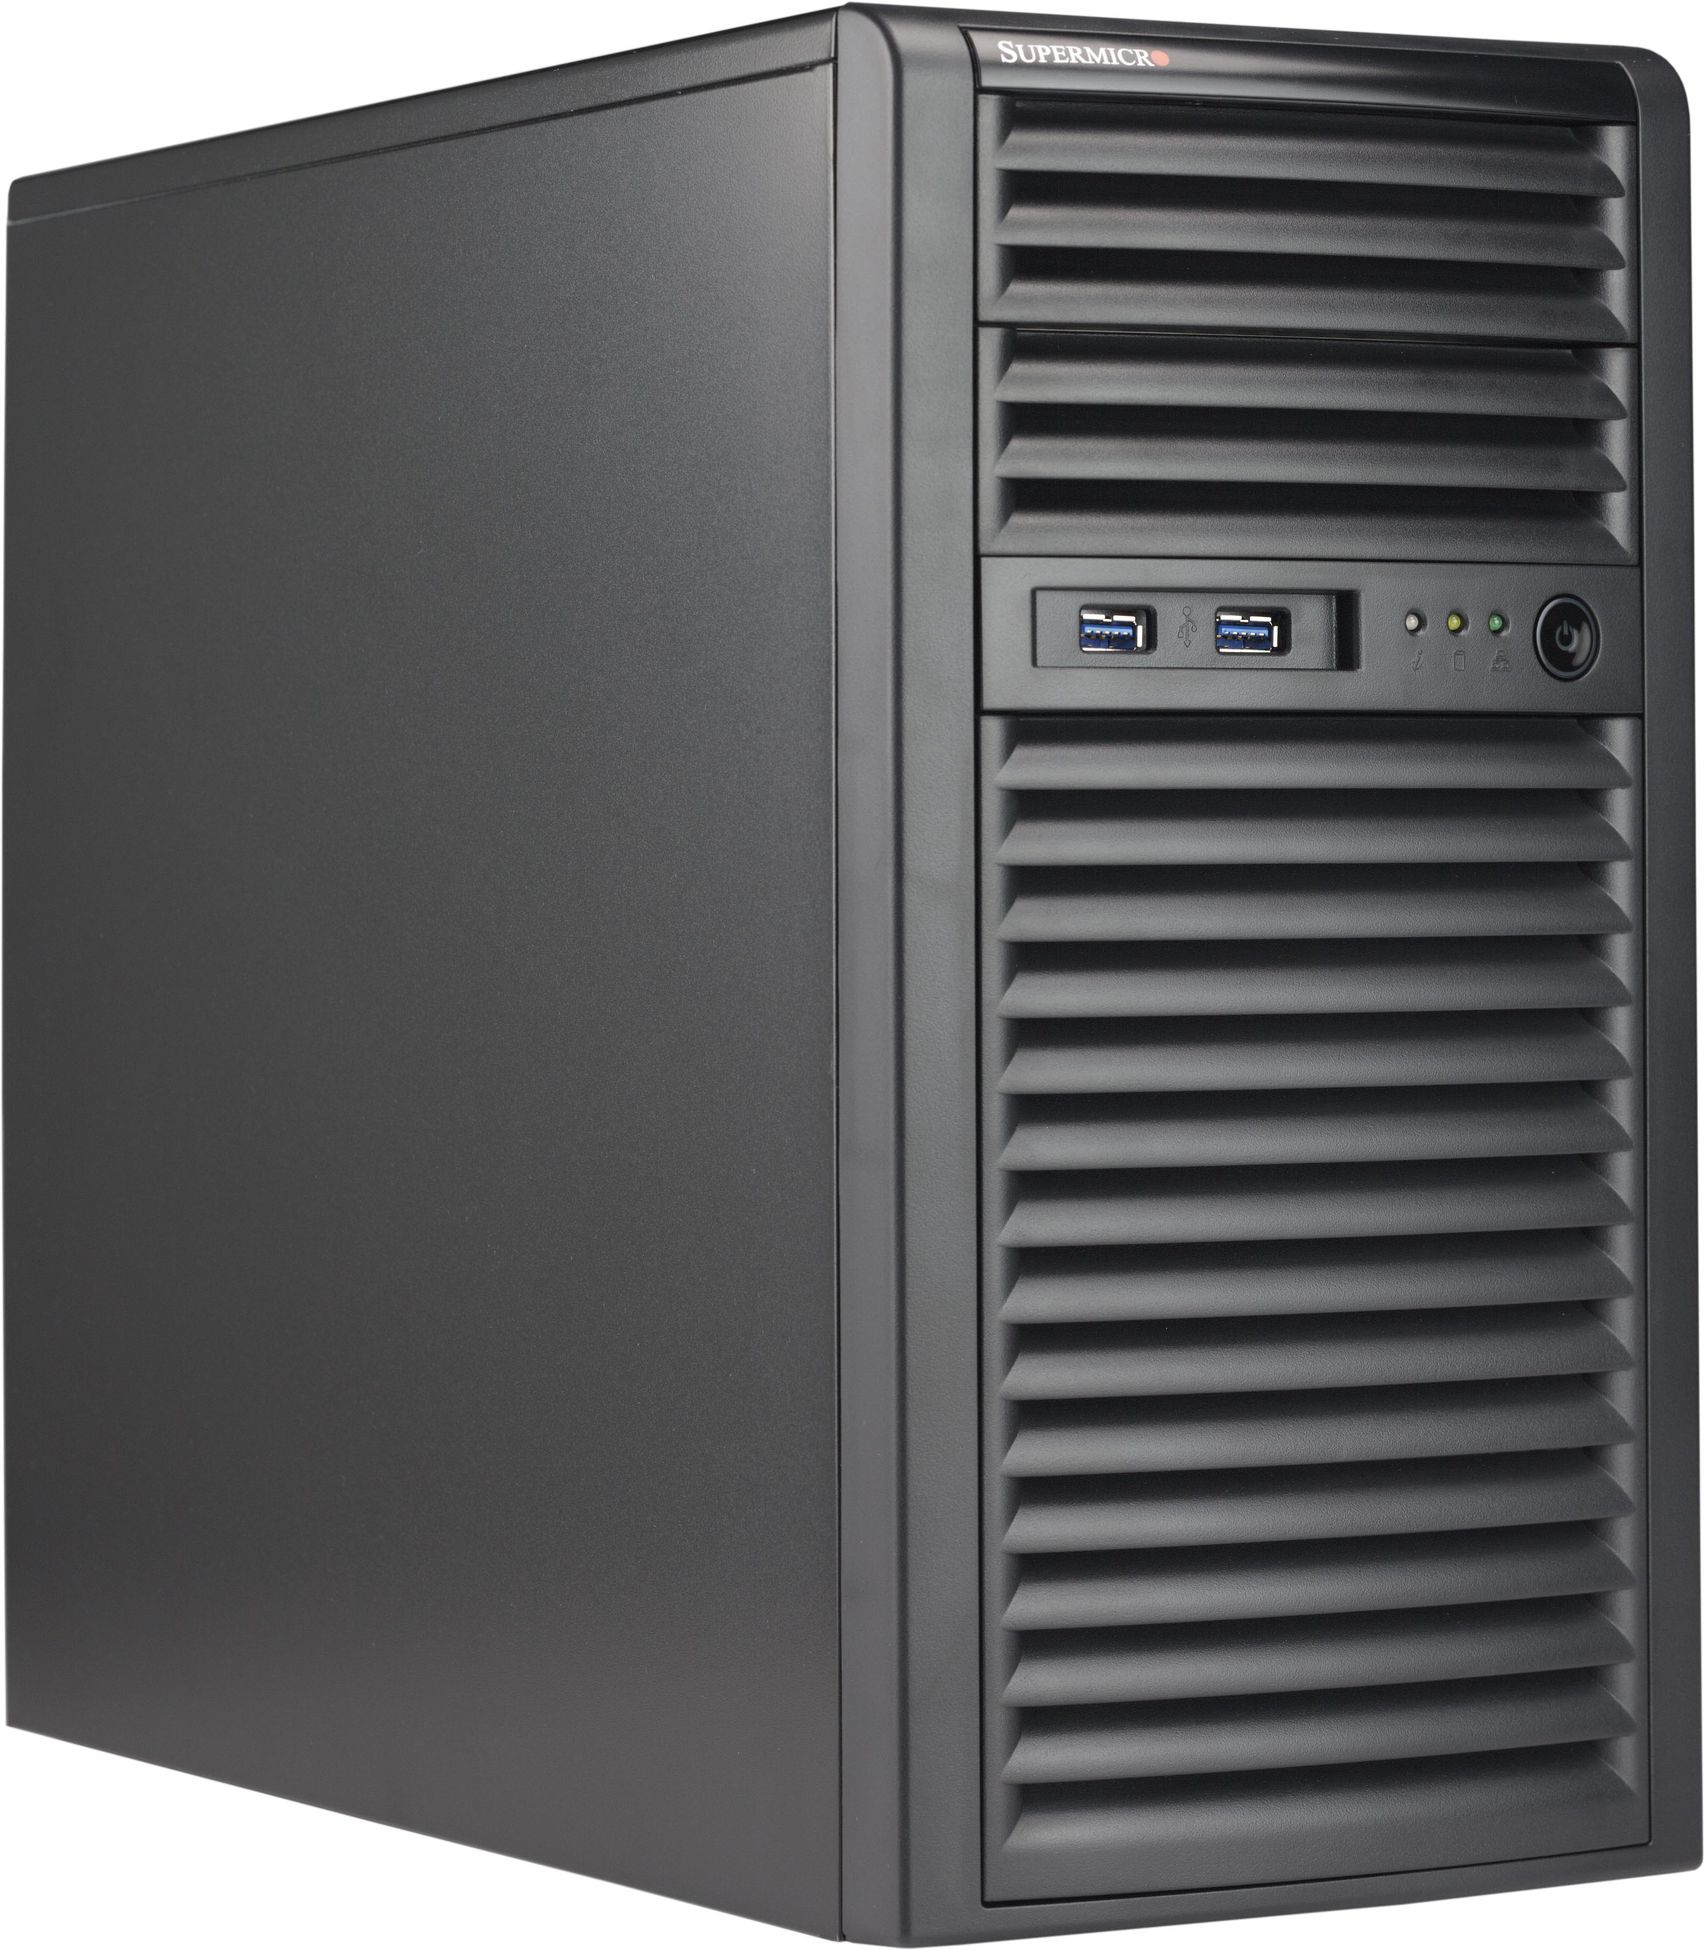 Подробное фото Сервер Supermicro 5039D Xeon E3-1220v6 16Gb 2133P DDR4 4x noHDD 3.5" SATA , RAID C232 , PSU 300W